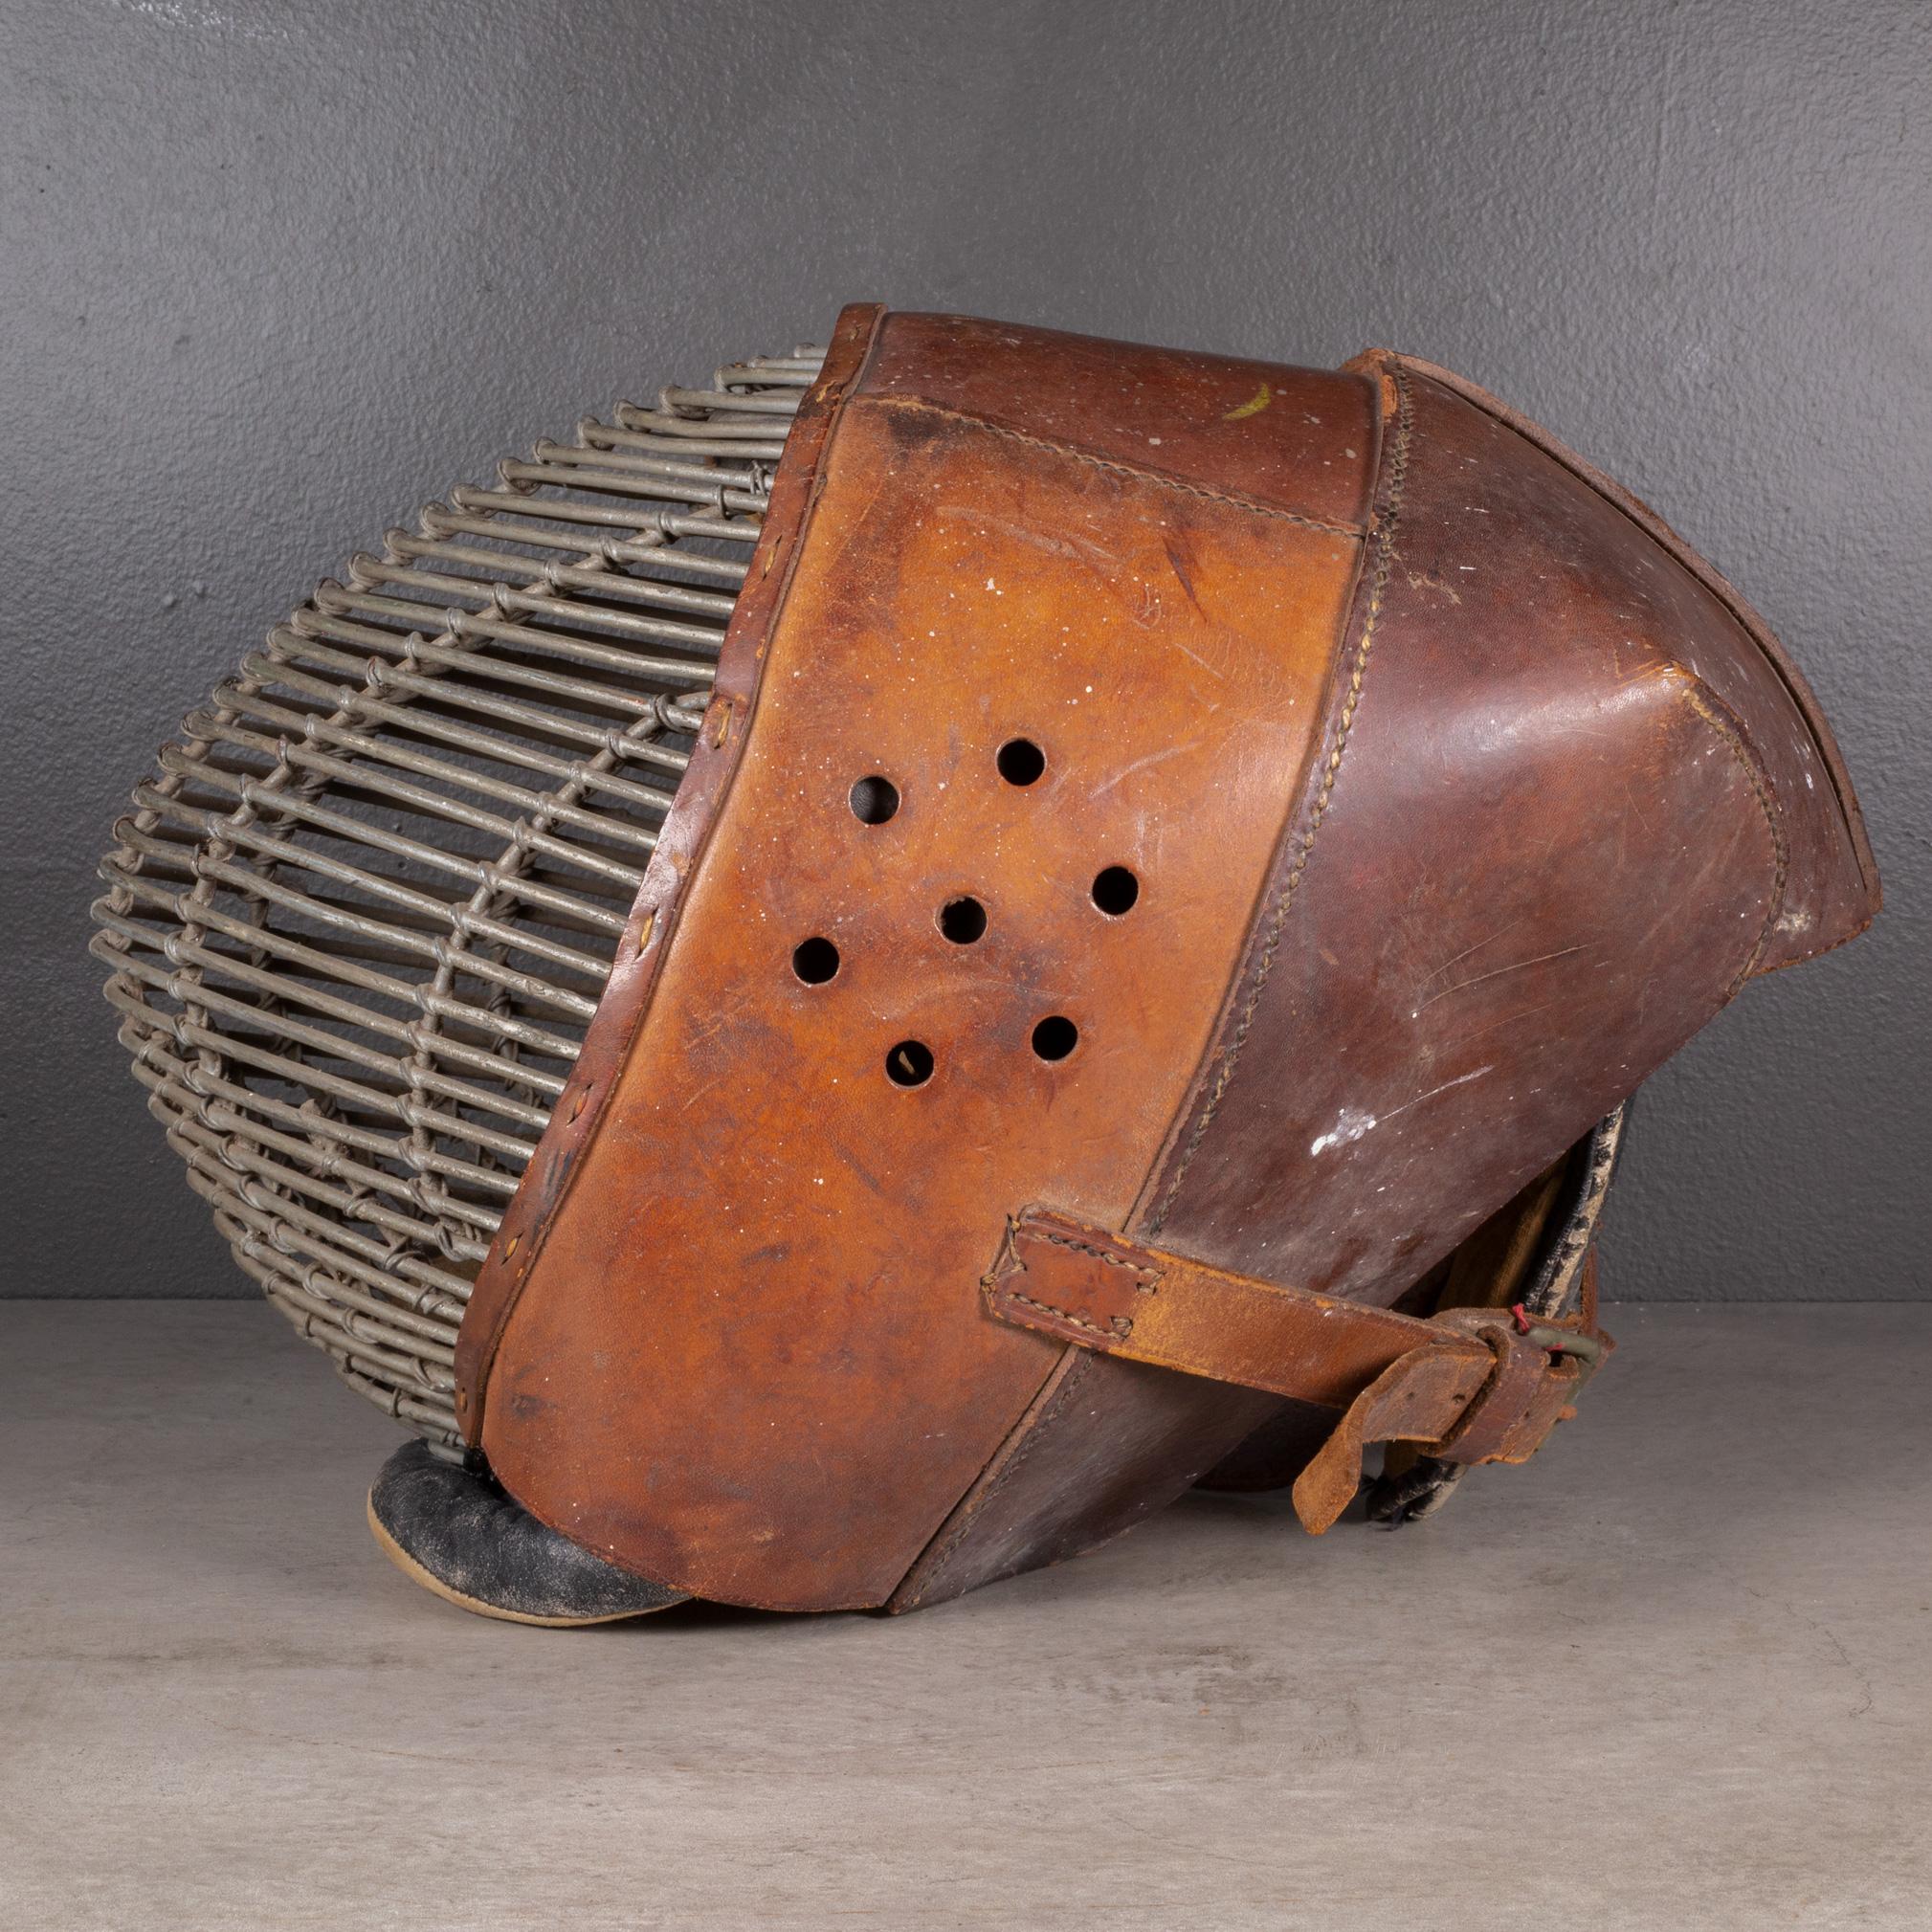 Industriel Masque Kendo japonais ancien en cuir vers 1920 (expédition gratuite) en vente